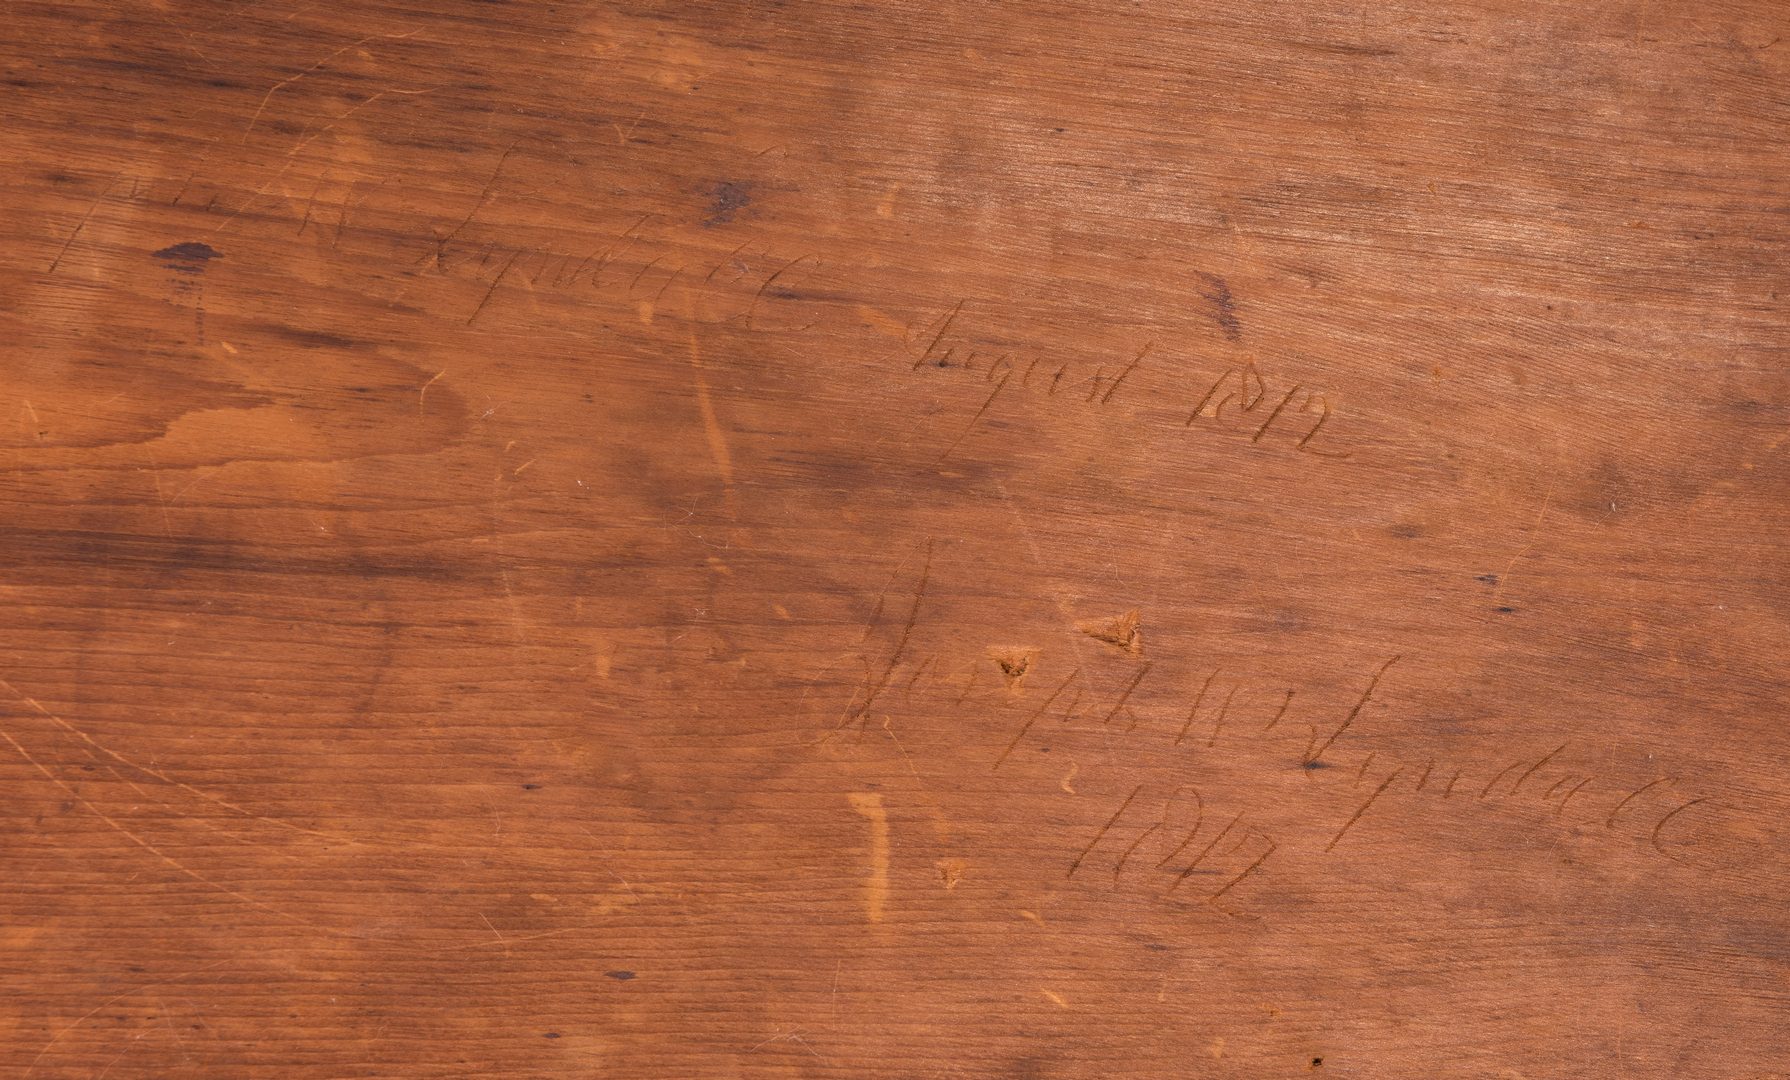 Lot 129: Philadelphia Slant Front Desk, Signed and Dated 1812, Joseph Lyndall